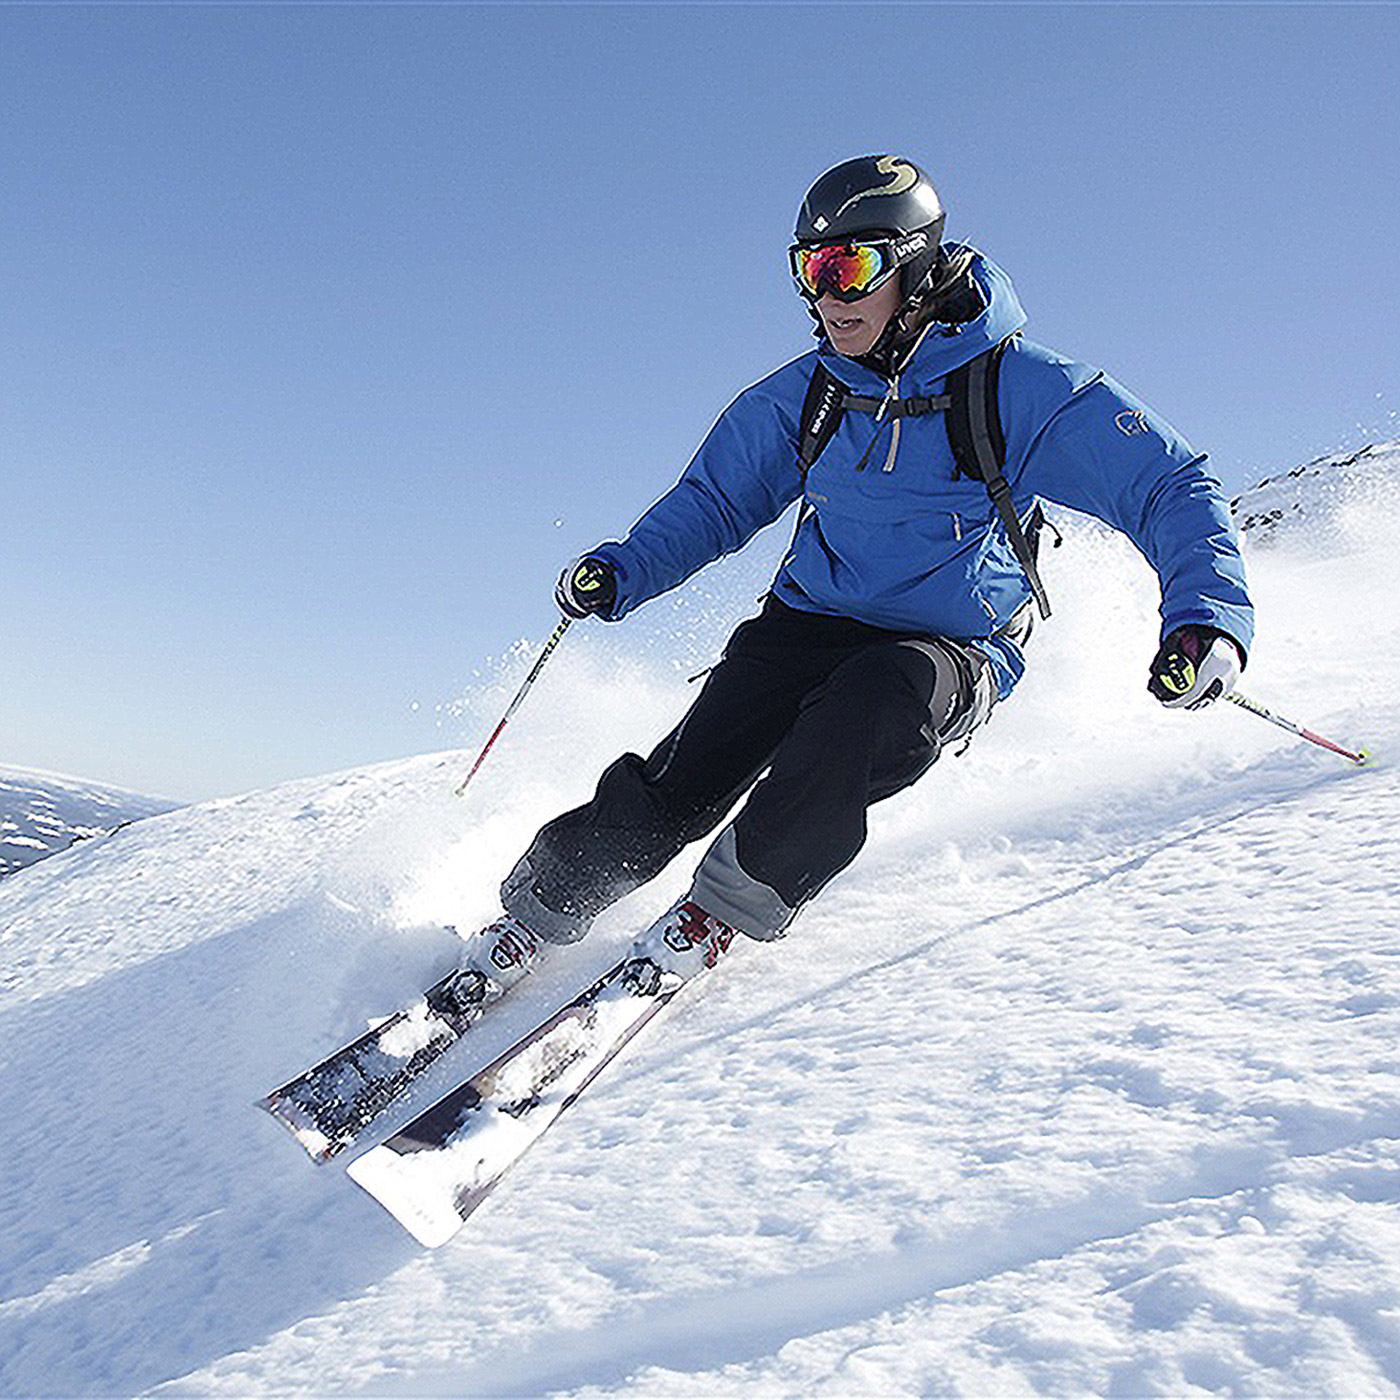 skiier 